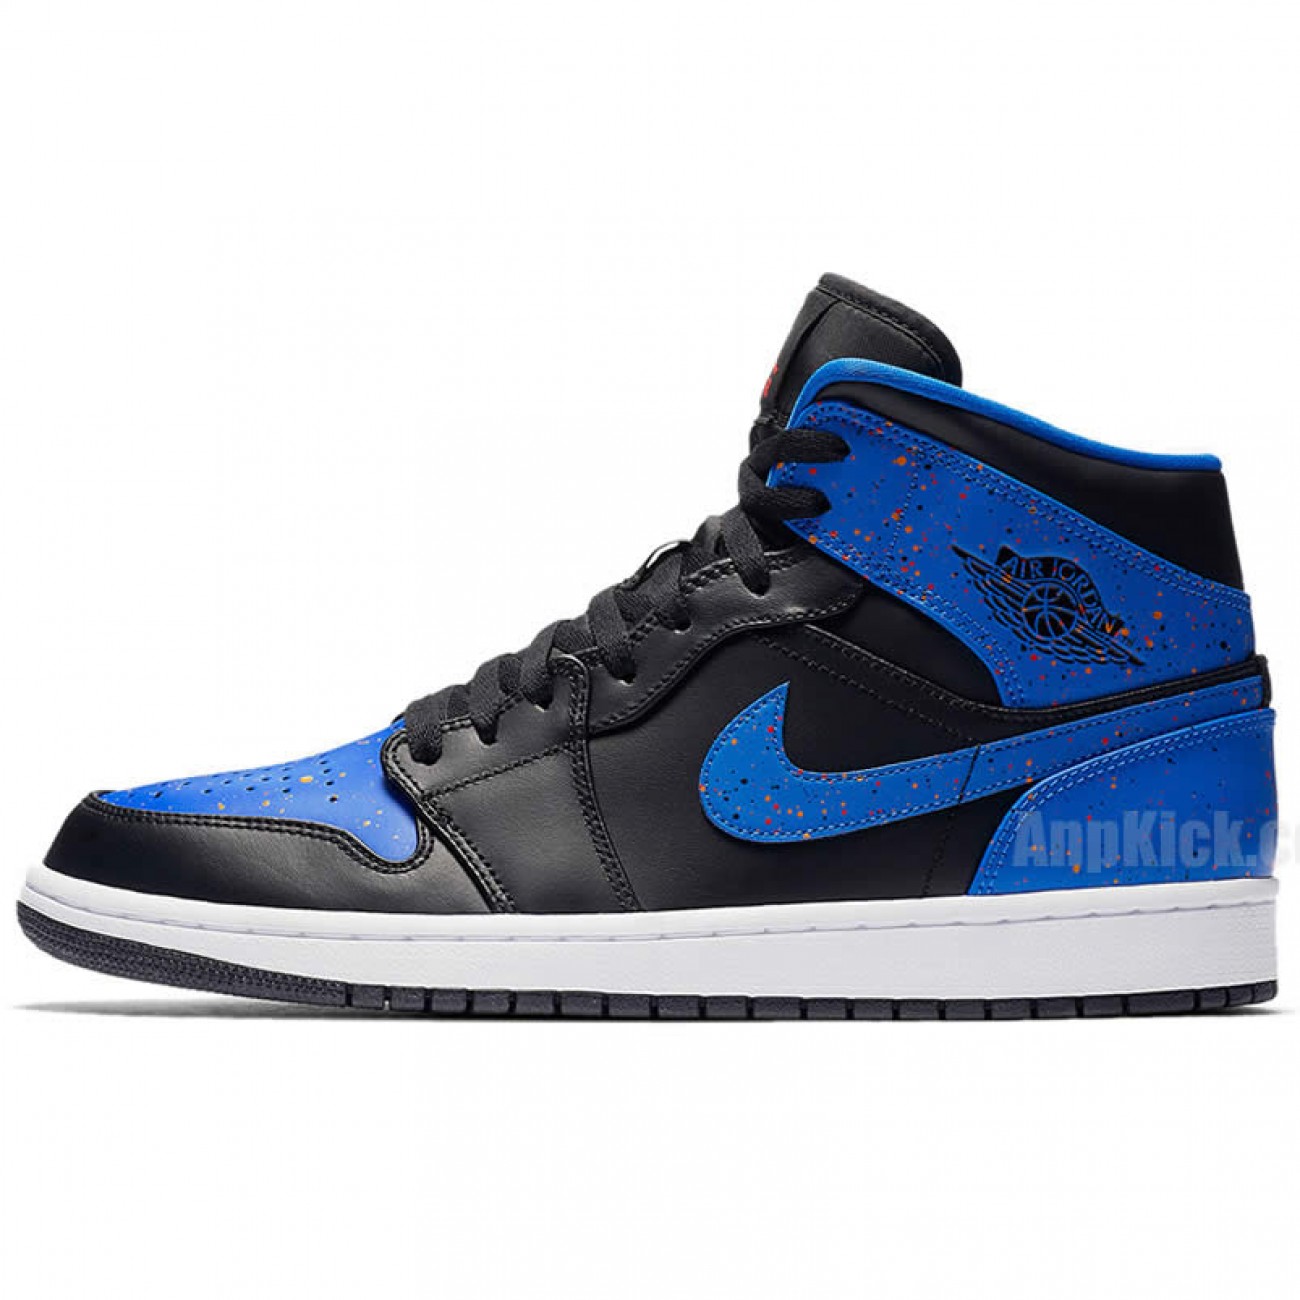 Air Jordan 1 Mid "Royal Blue" Paint Splatter Shoes 554724-048